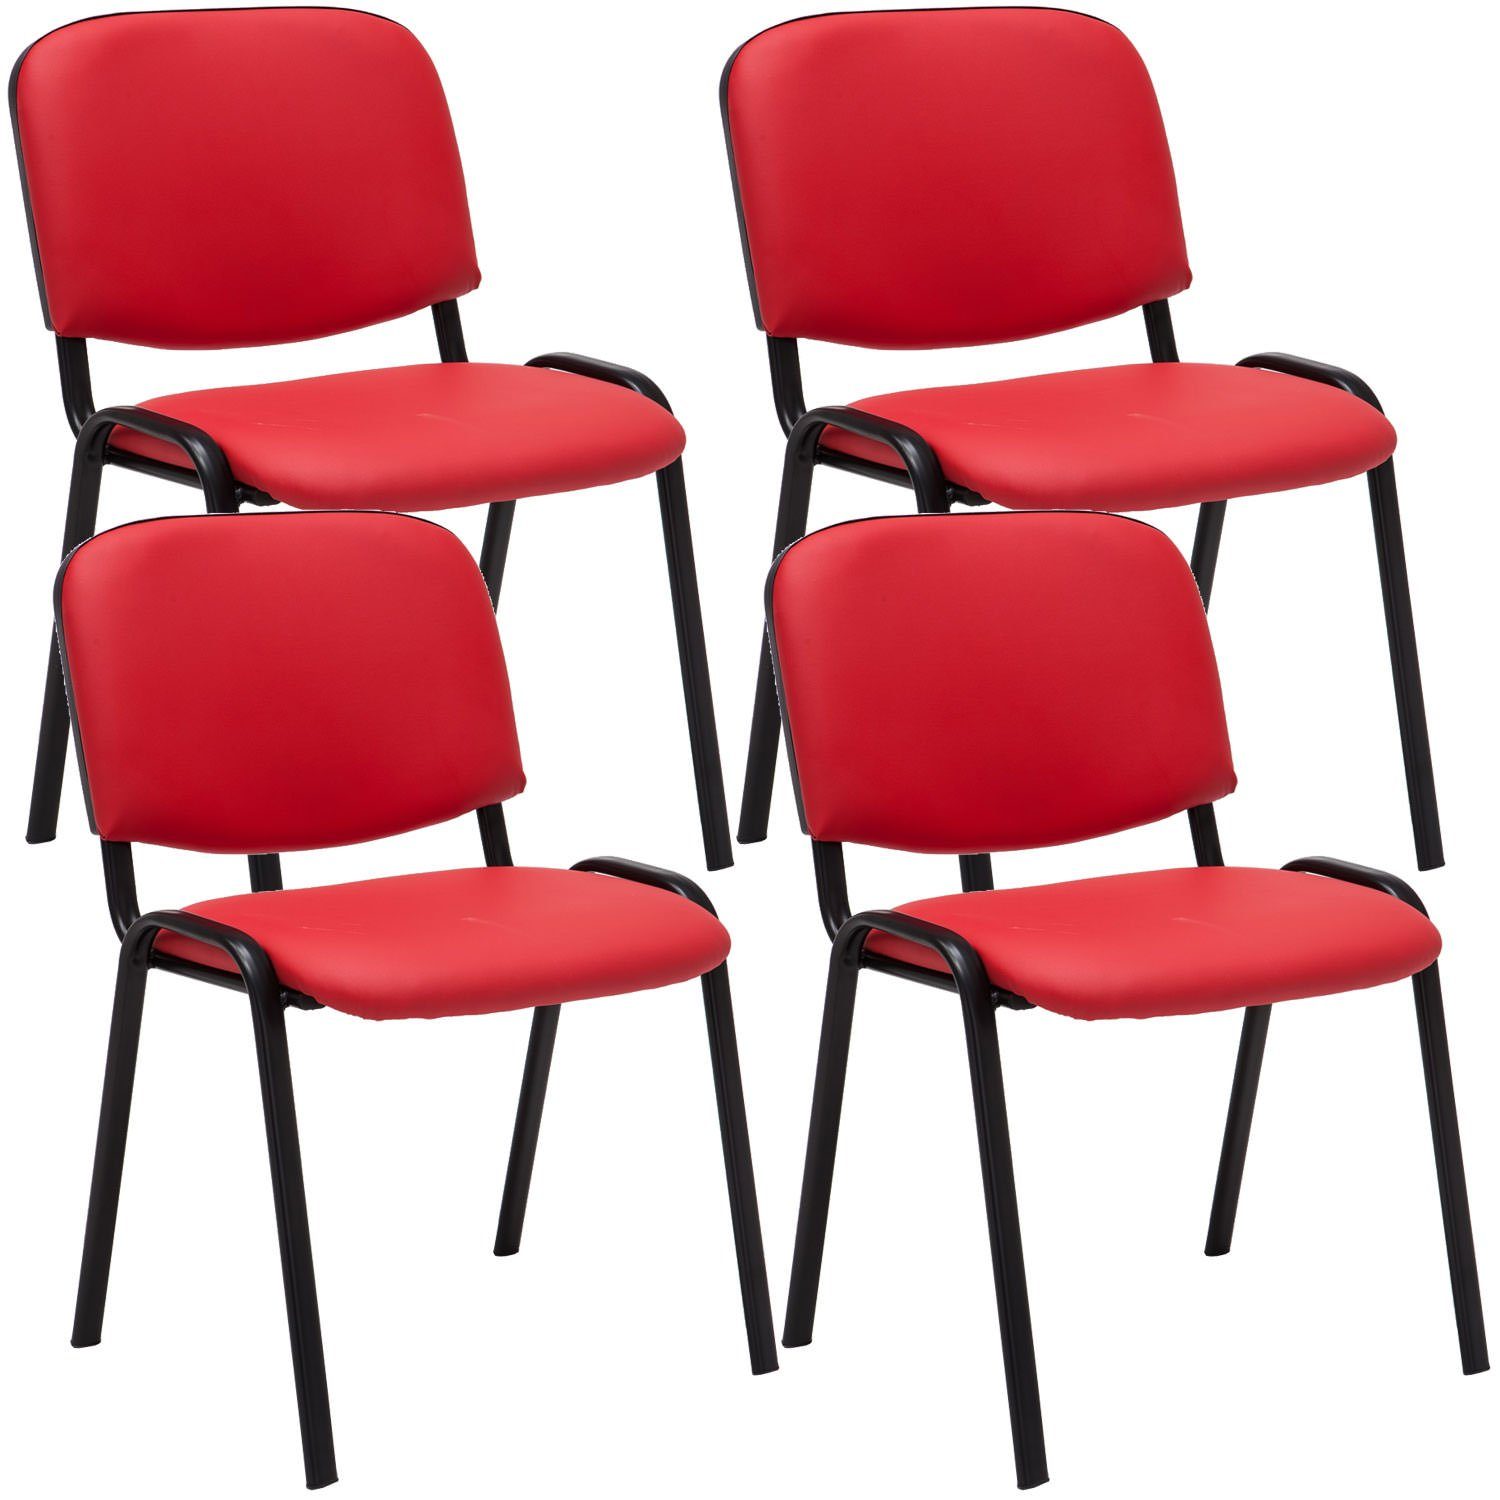 TPFLiving Besucherstuhl Keen mit hochwertiger Polsterung - Konferenzstuhl (Besprechungsstuhl - Warteraumstuhl - Messestuhl, 4 St), Gestell: Metall matt schwarz - Sitzfläche: Kunstleder rot